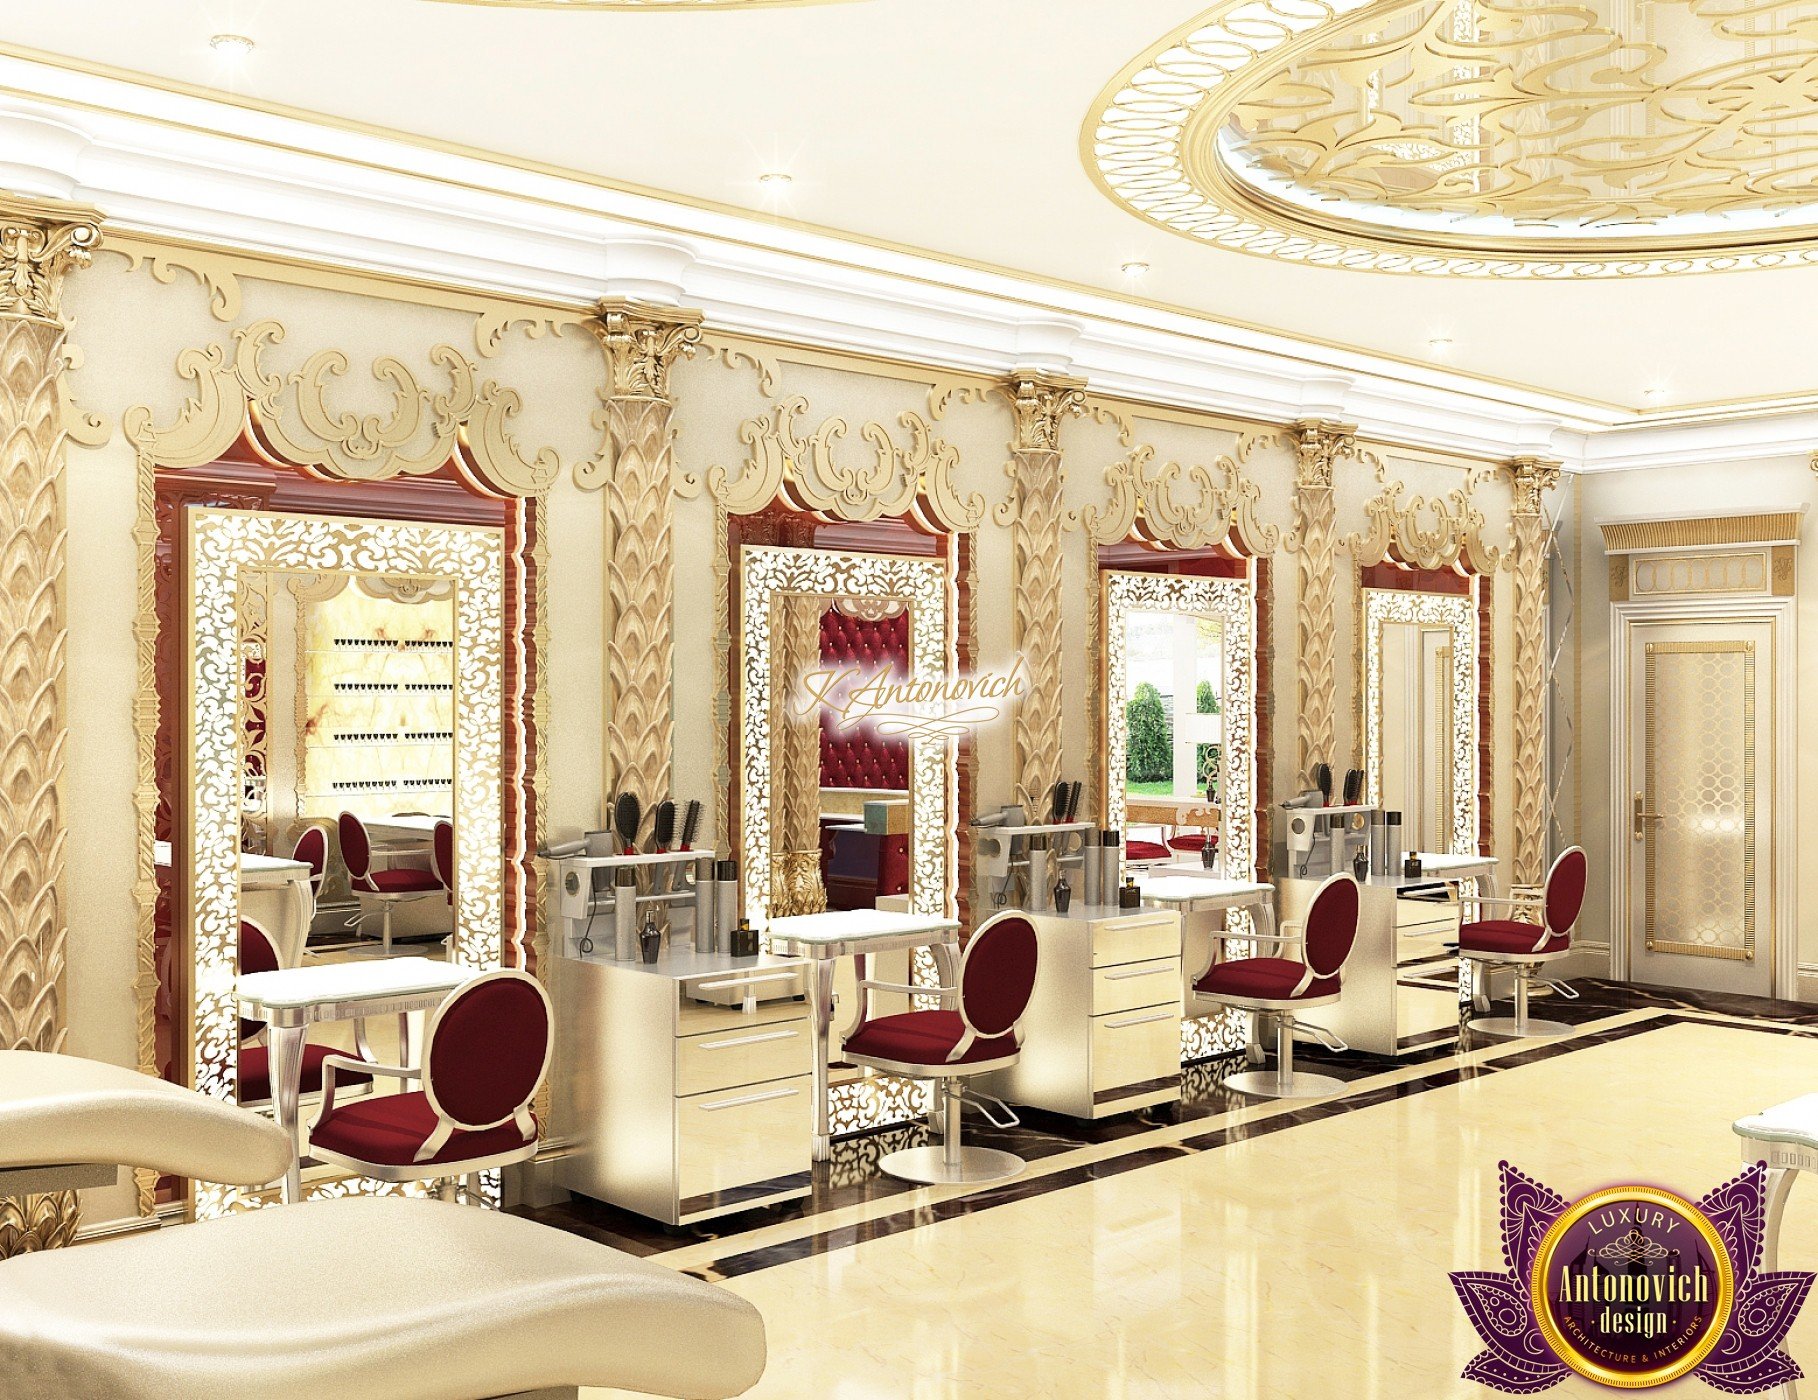 beauty salon pictures interior